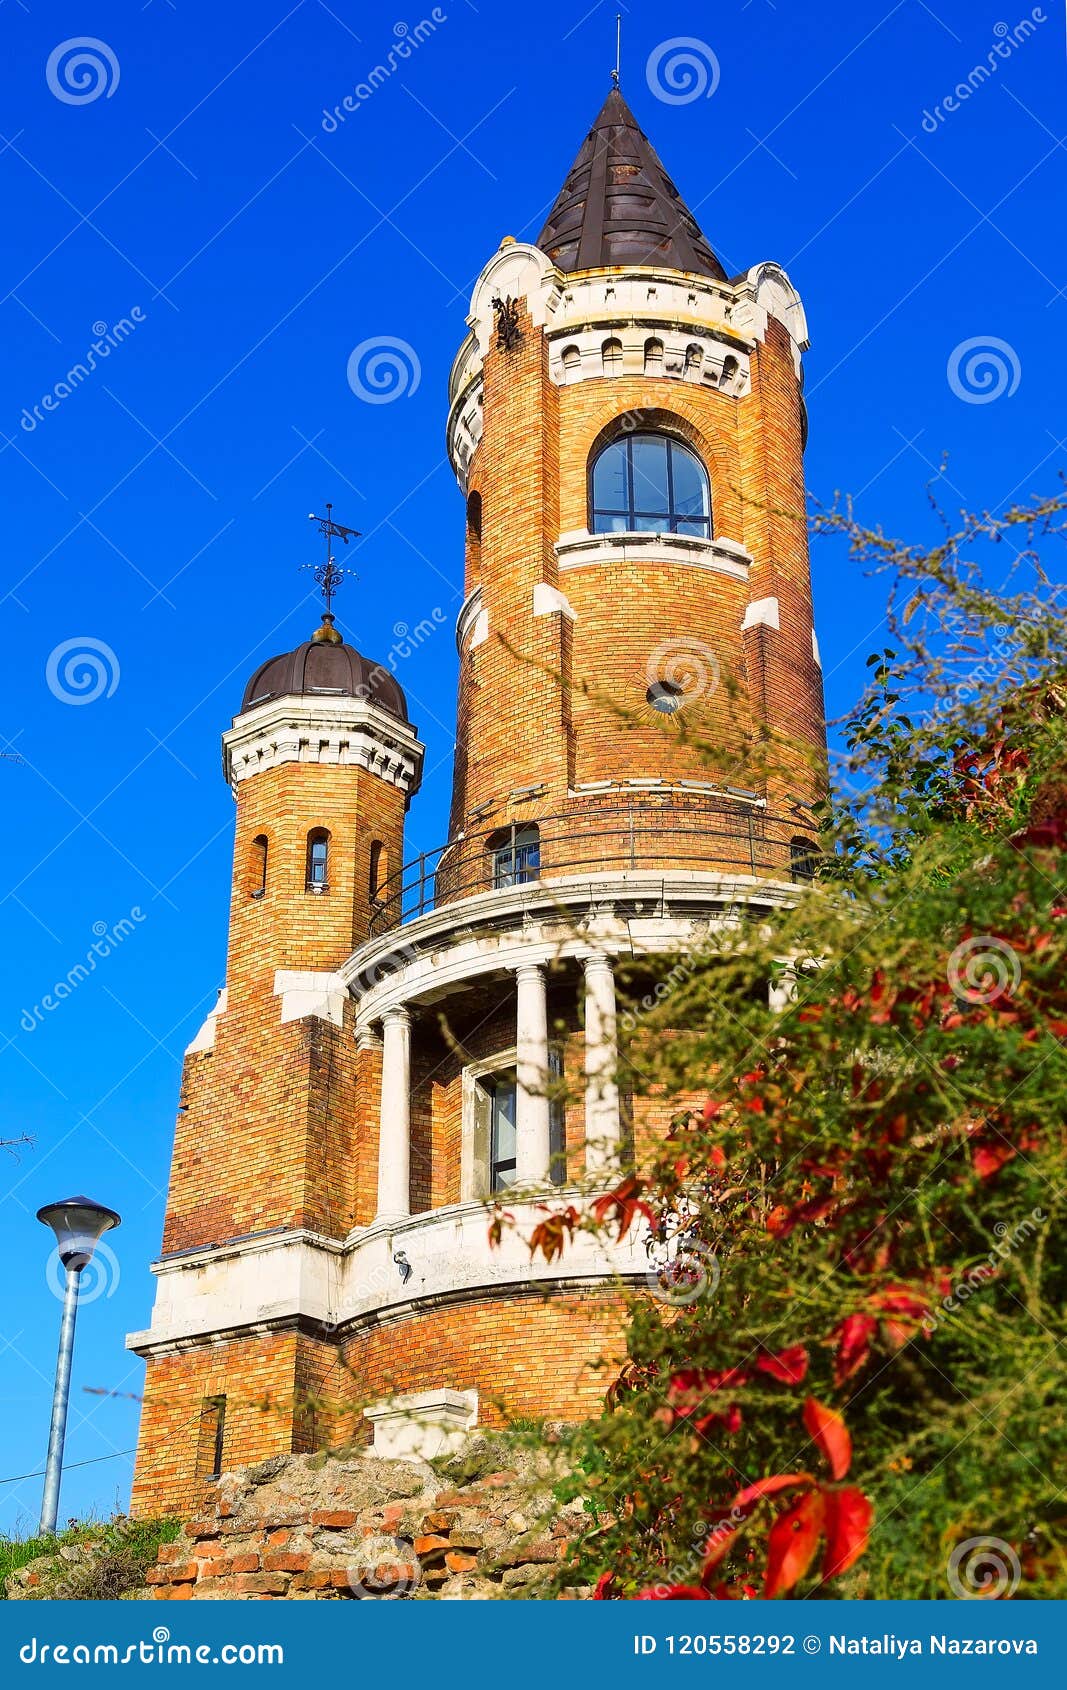 tower on gardos hill in zemun, belgrade